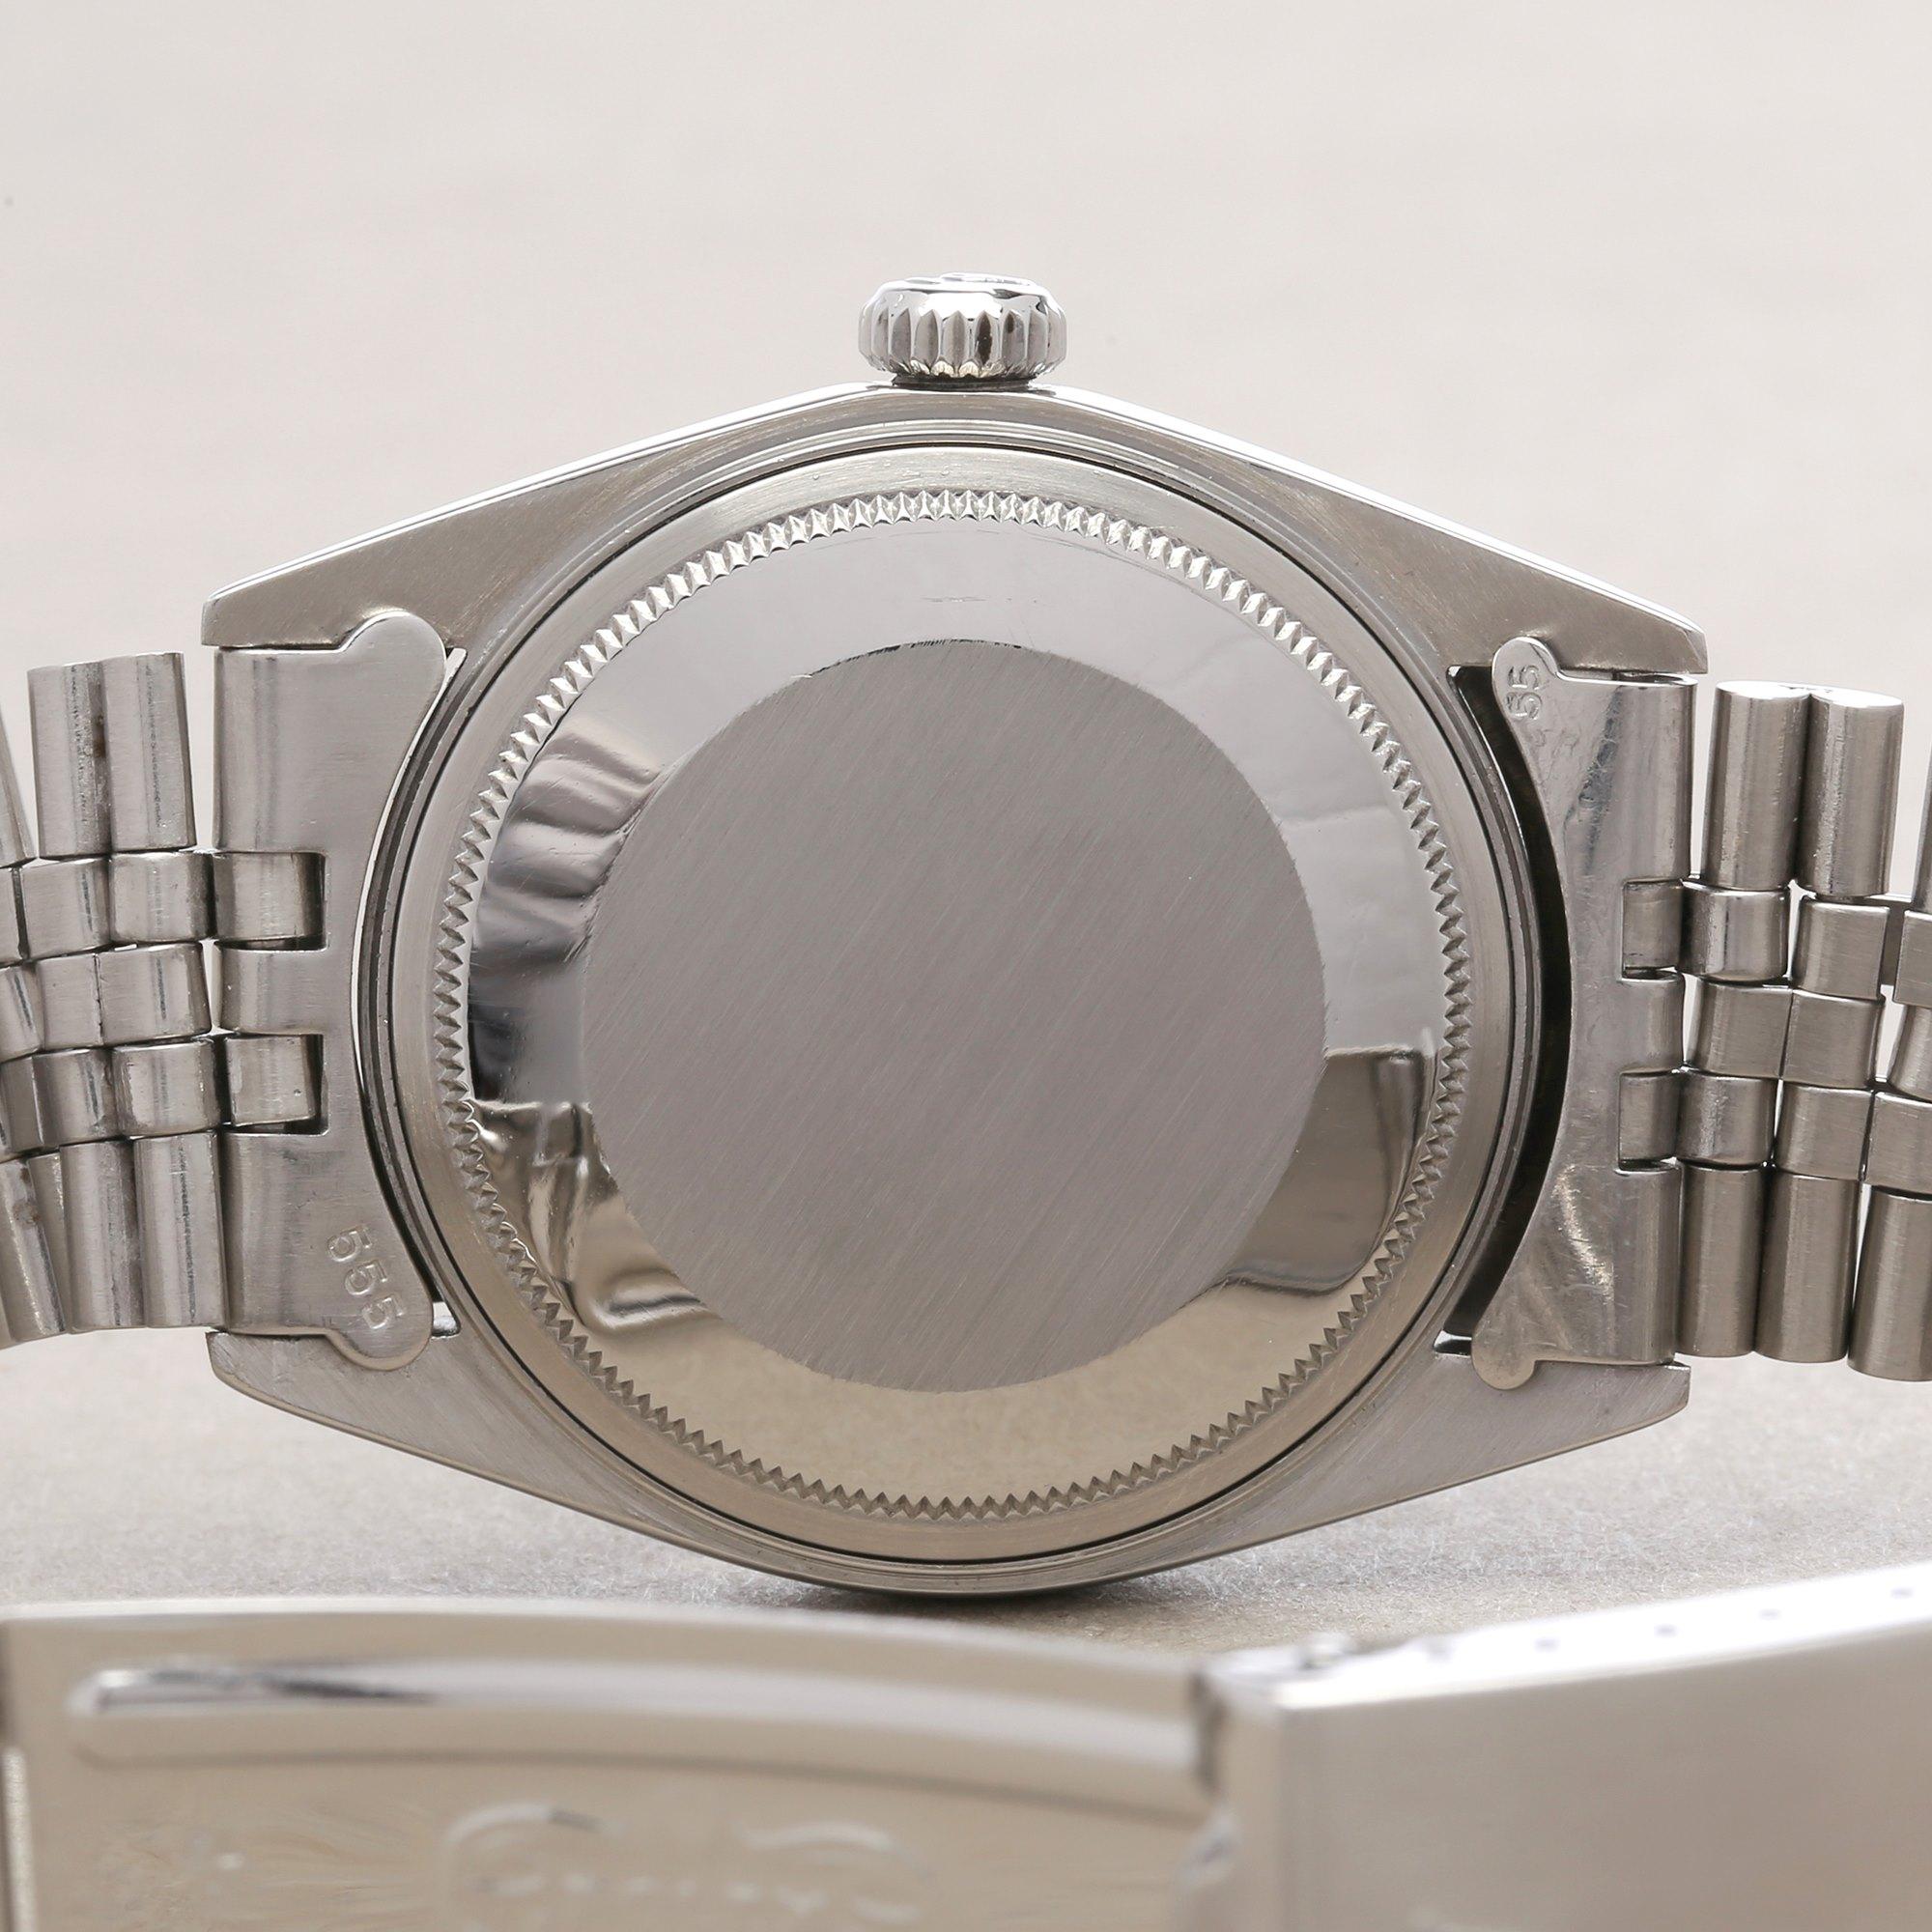 Rolex Datejust 36 1601 Men's White Gold & Stainless Steel Watch 4